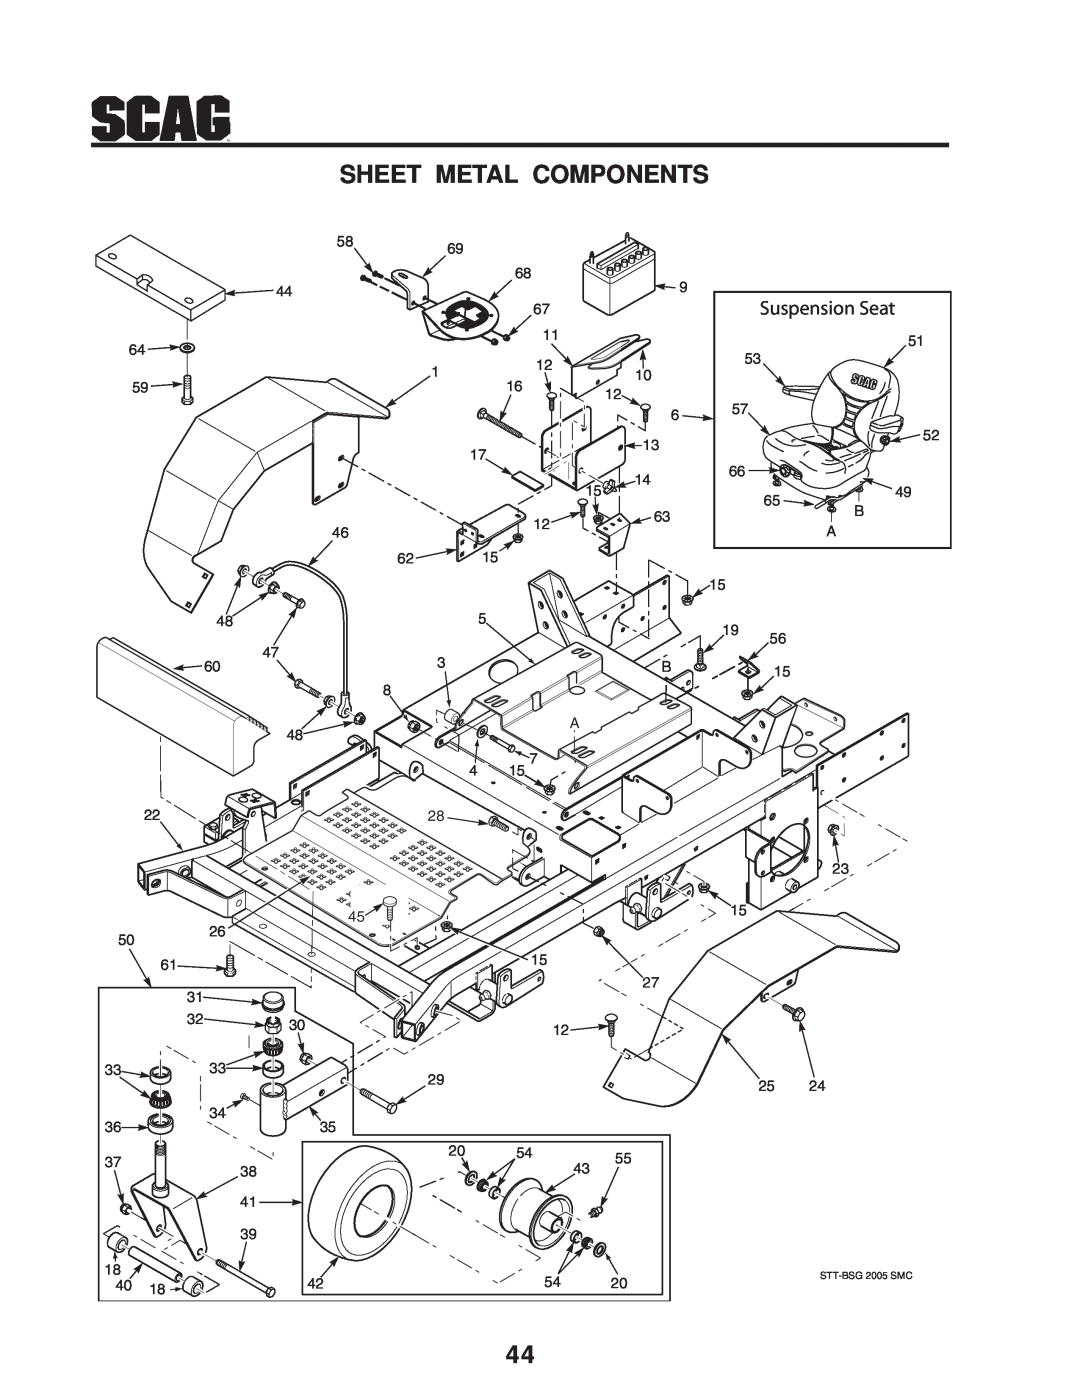 Scag Power Equipment STT-31BSD manual Sheet Metal Components, Suspension Seat, STT-BSG 2005 SMC 